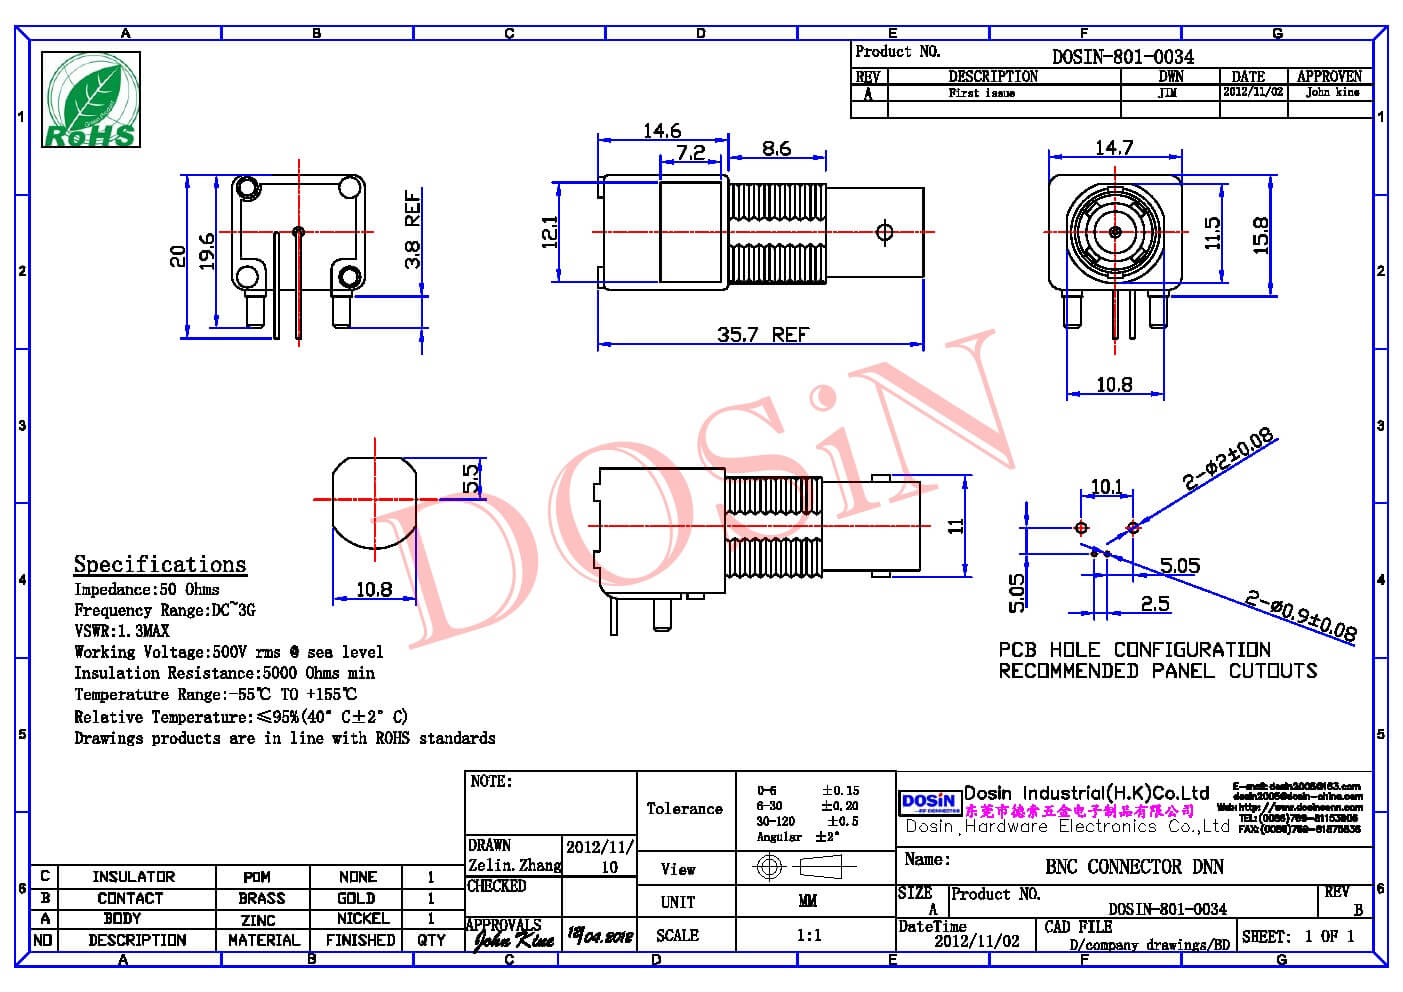 dometic #3316230.000 wiring diagram